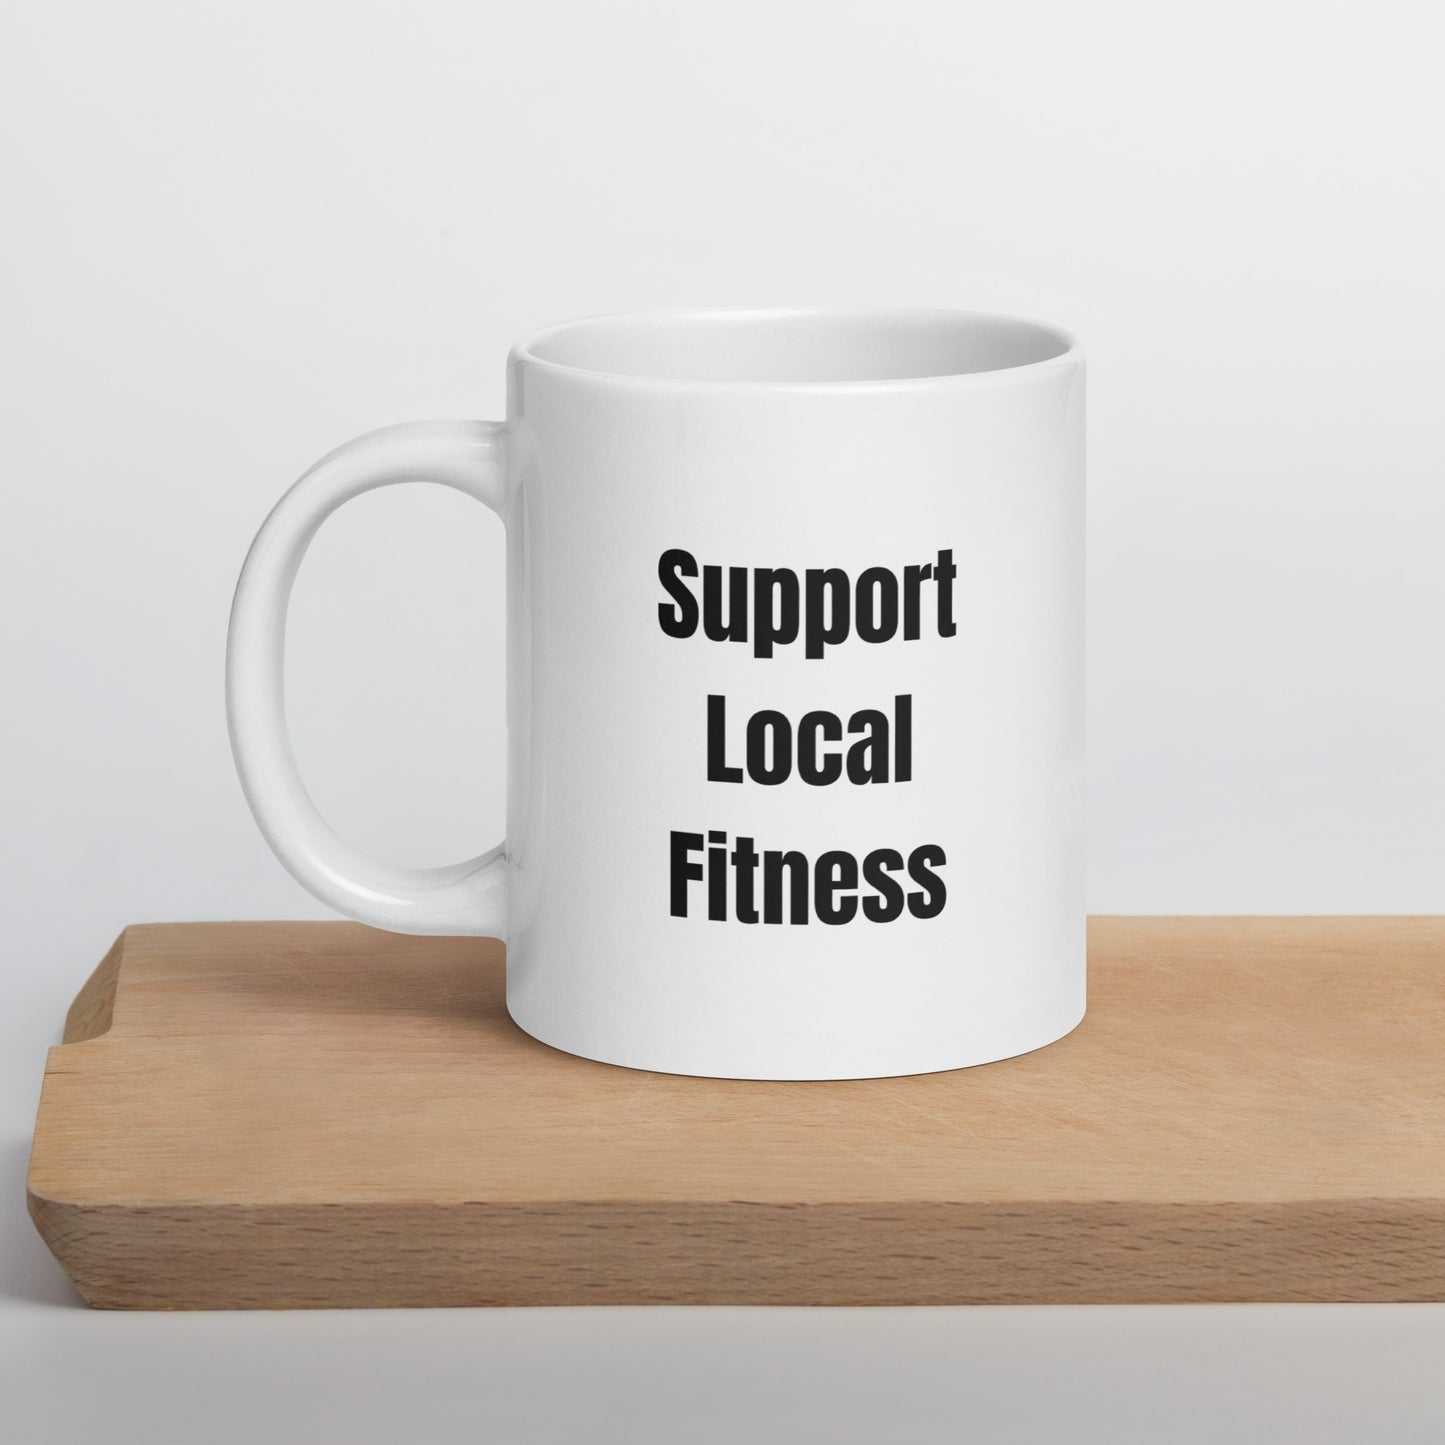 Support Local Fitness Crossfit mug, Crossfit gift for men and women, Crossfit gifts, Crossfit coffee mug, Crossfit cup